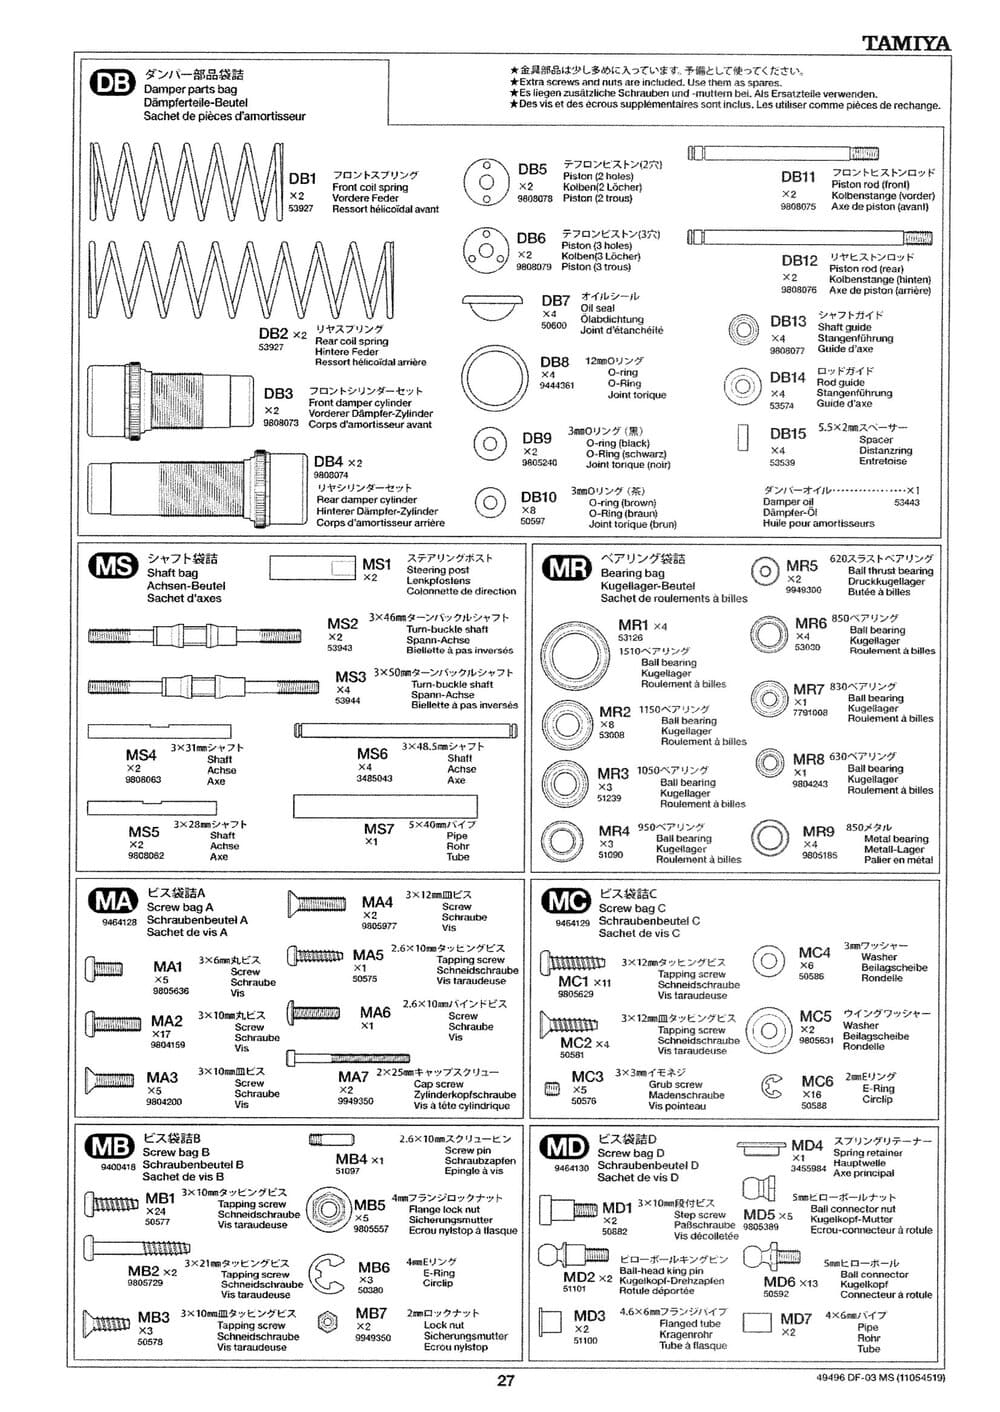 Tamiya - DF-03 MS Chassis Chassis - Manual - Page 27